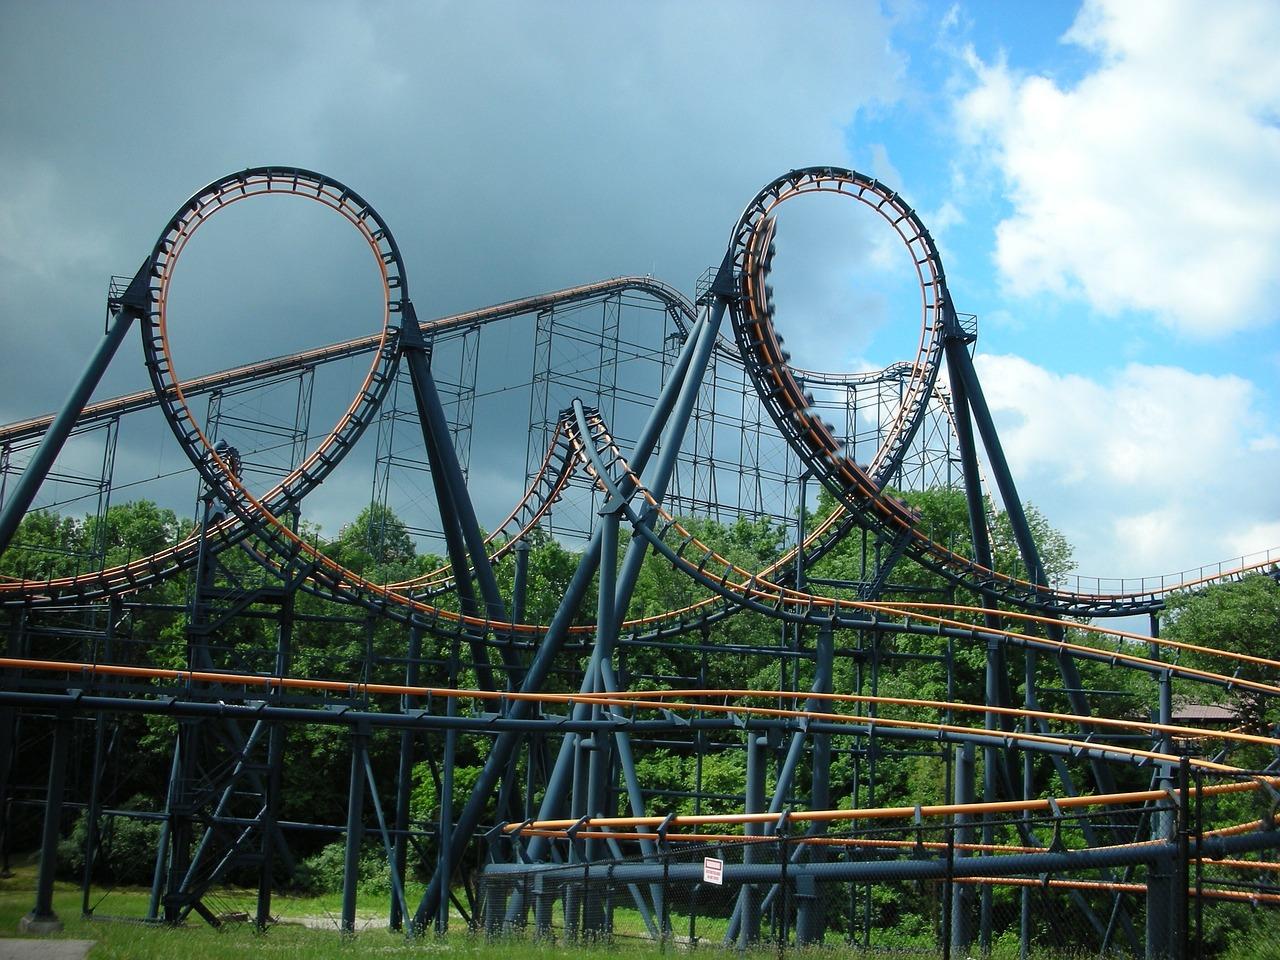 How would you describe a roller coaster ride? 